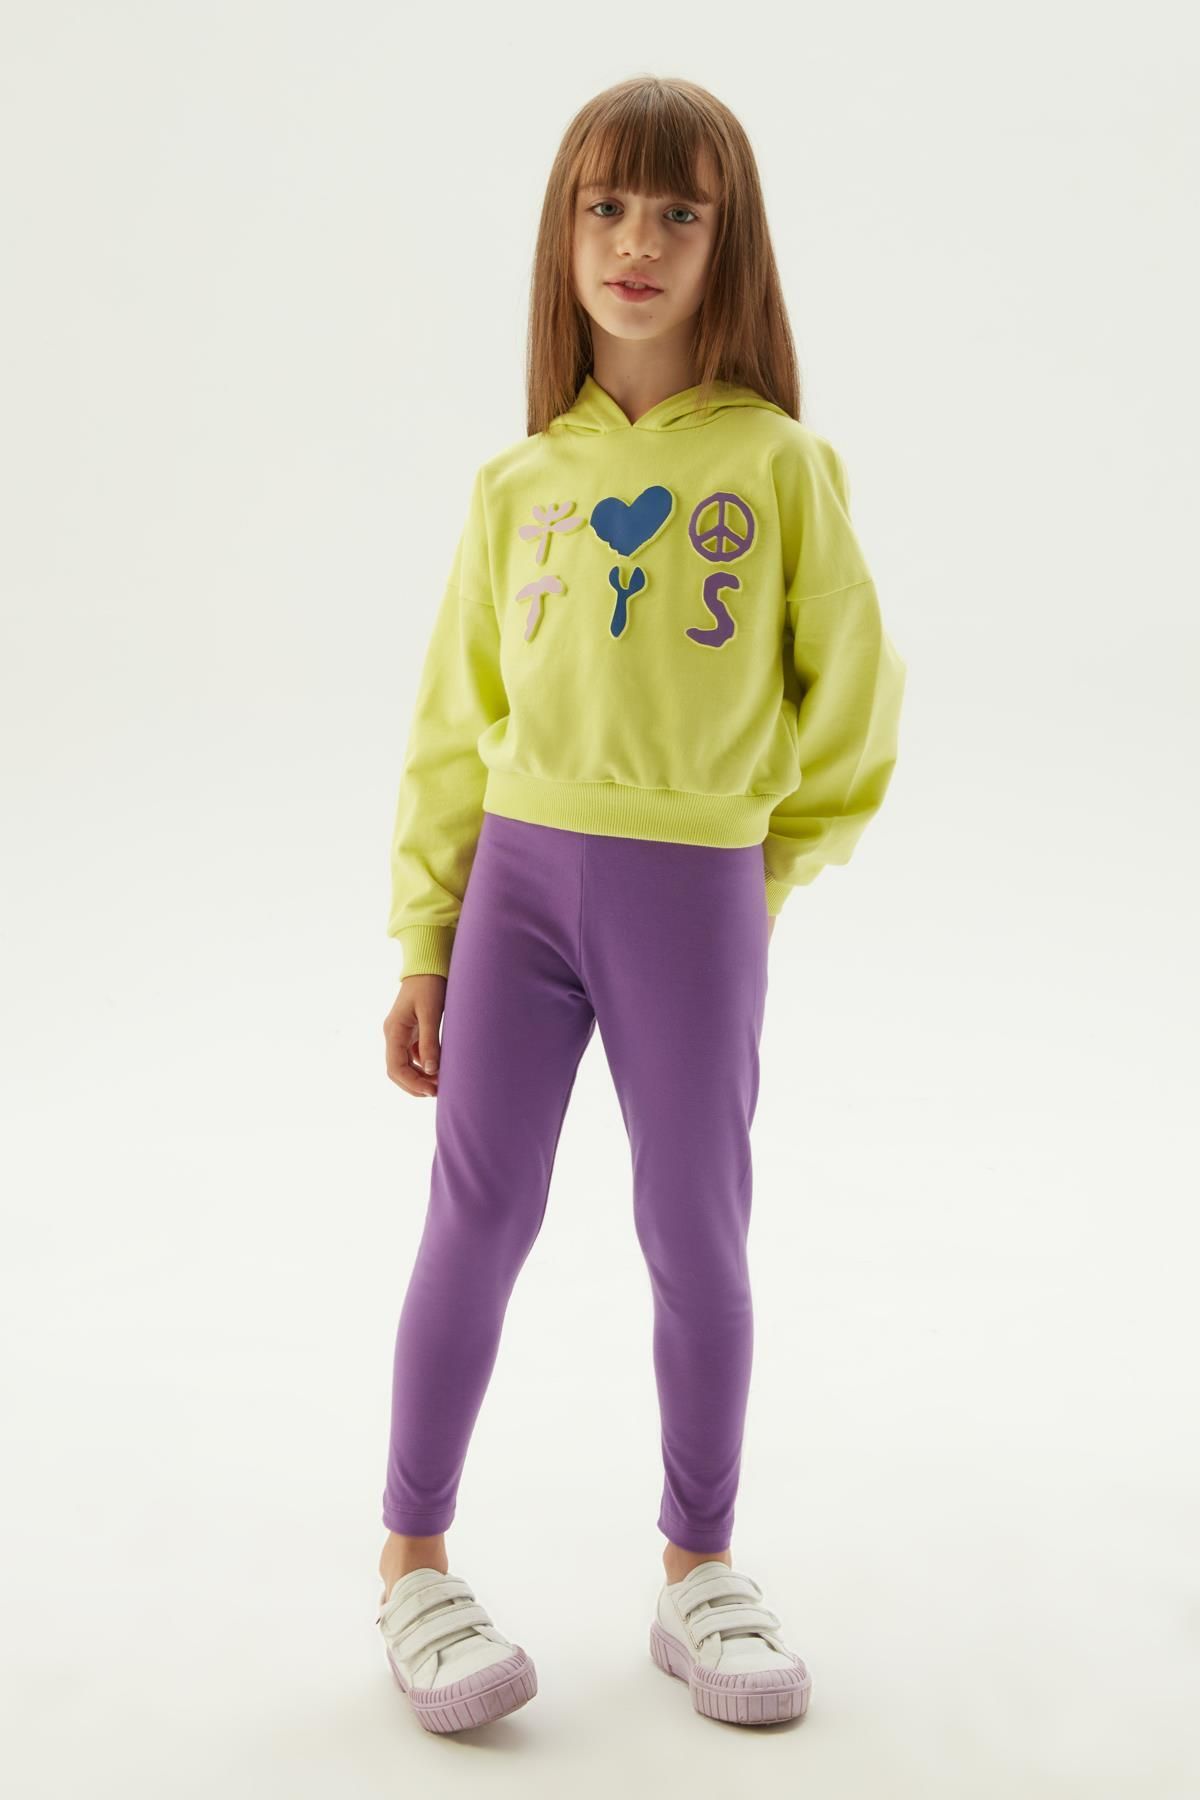 Tyess BG Store Kız Çocuk Yeşil Sweatshirt